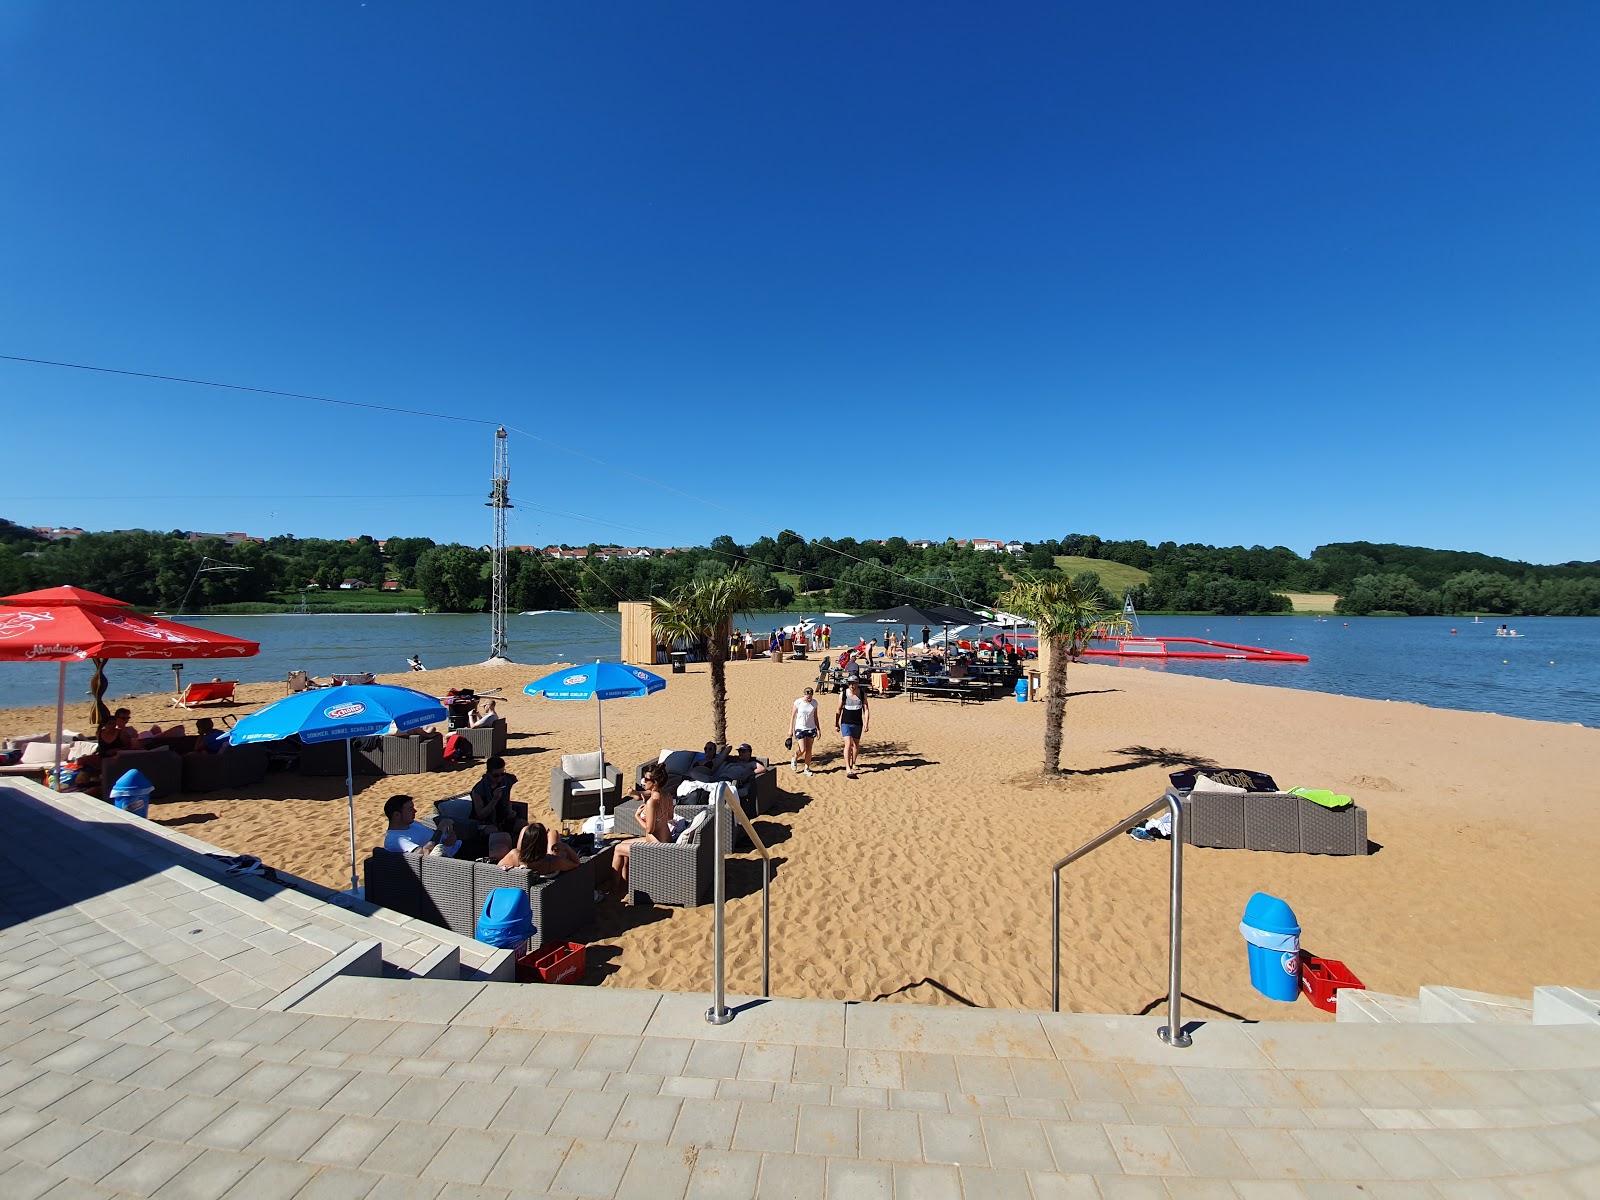 Photo of Spielplatz Wakepark Brombachsee with spacious shore